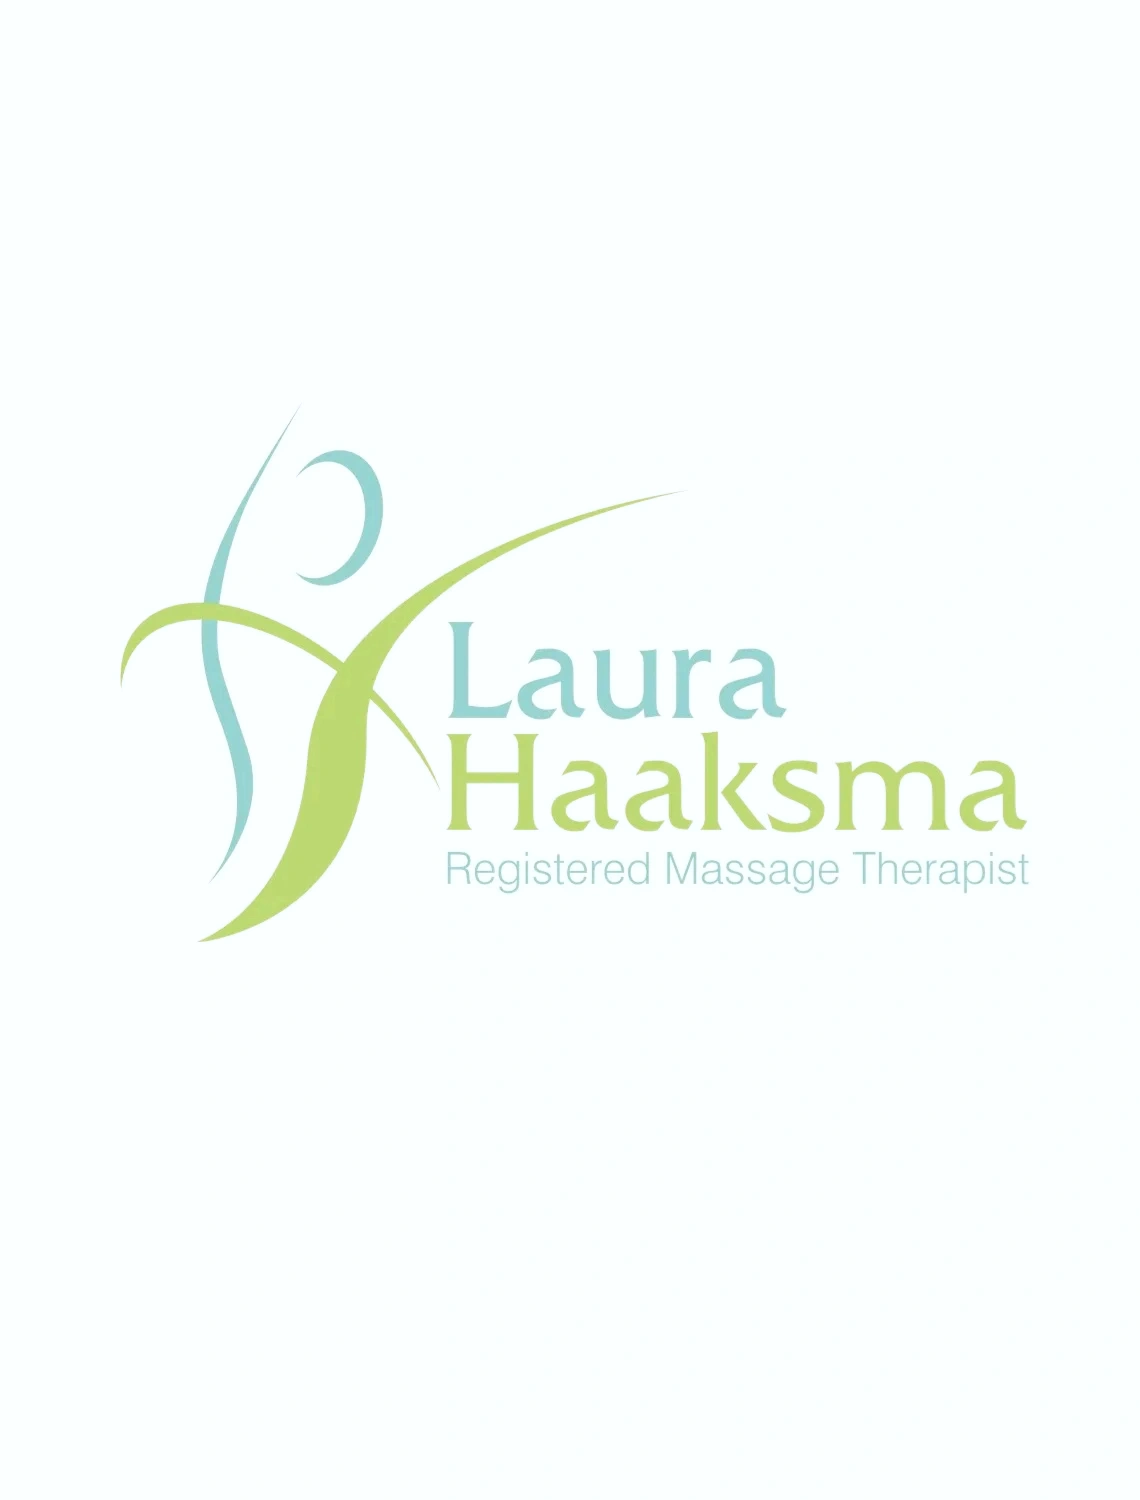 Laura Haaksma Registered Massage Therapist